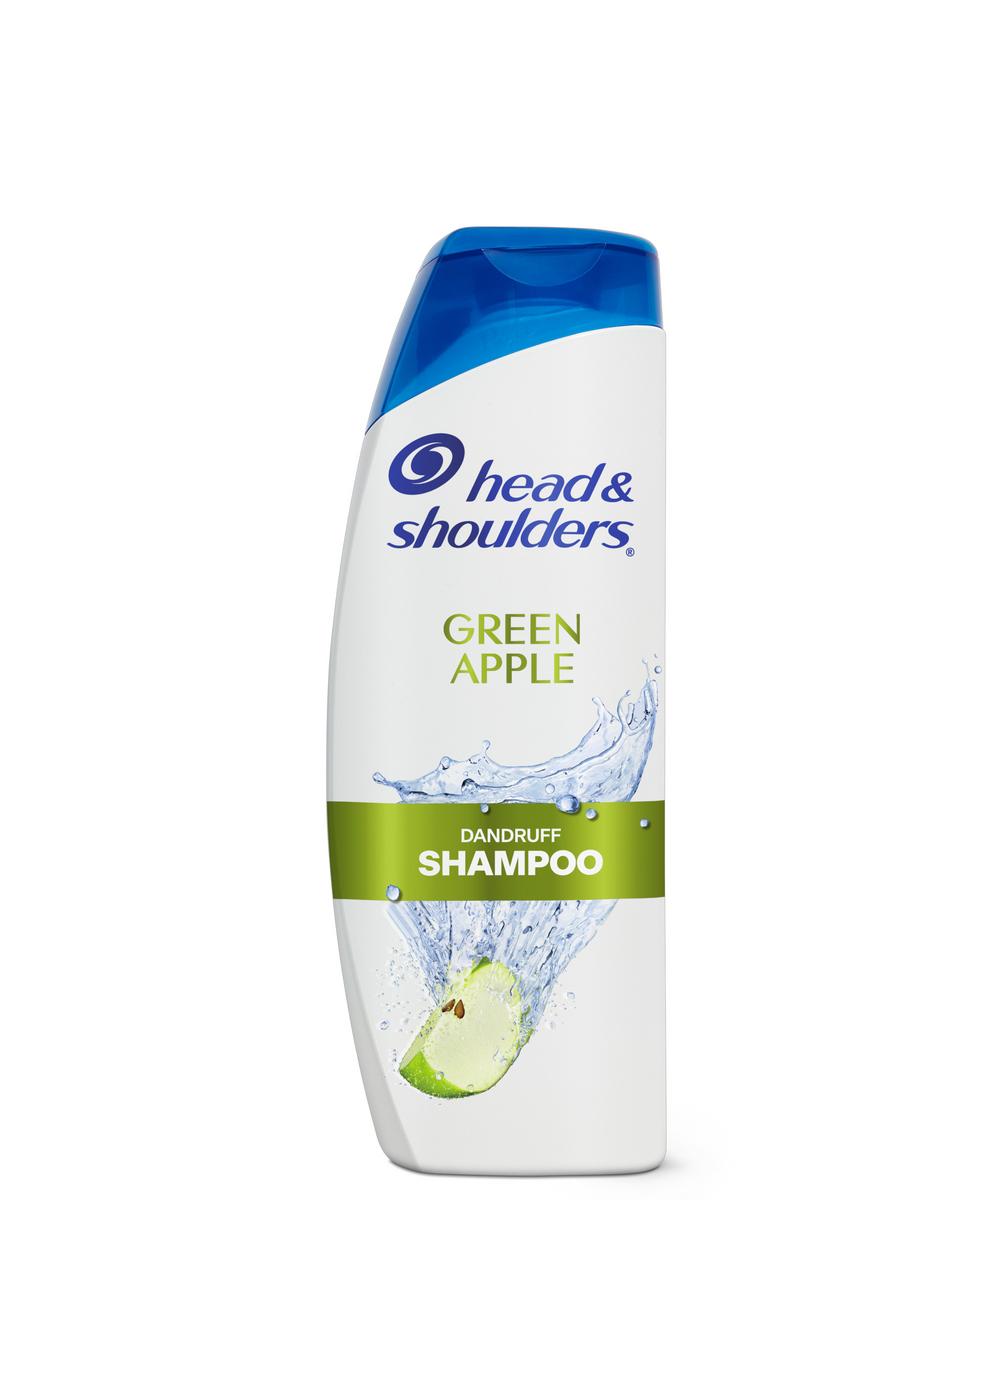 Head & Shoulders Dandruff Shampoo - Green Apple; image 5 of 11